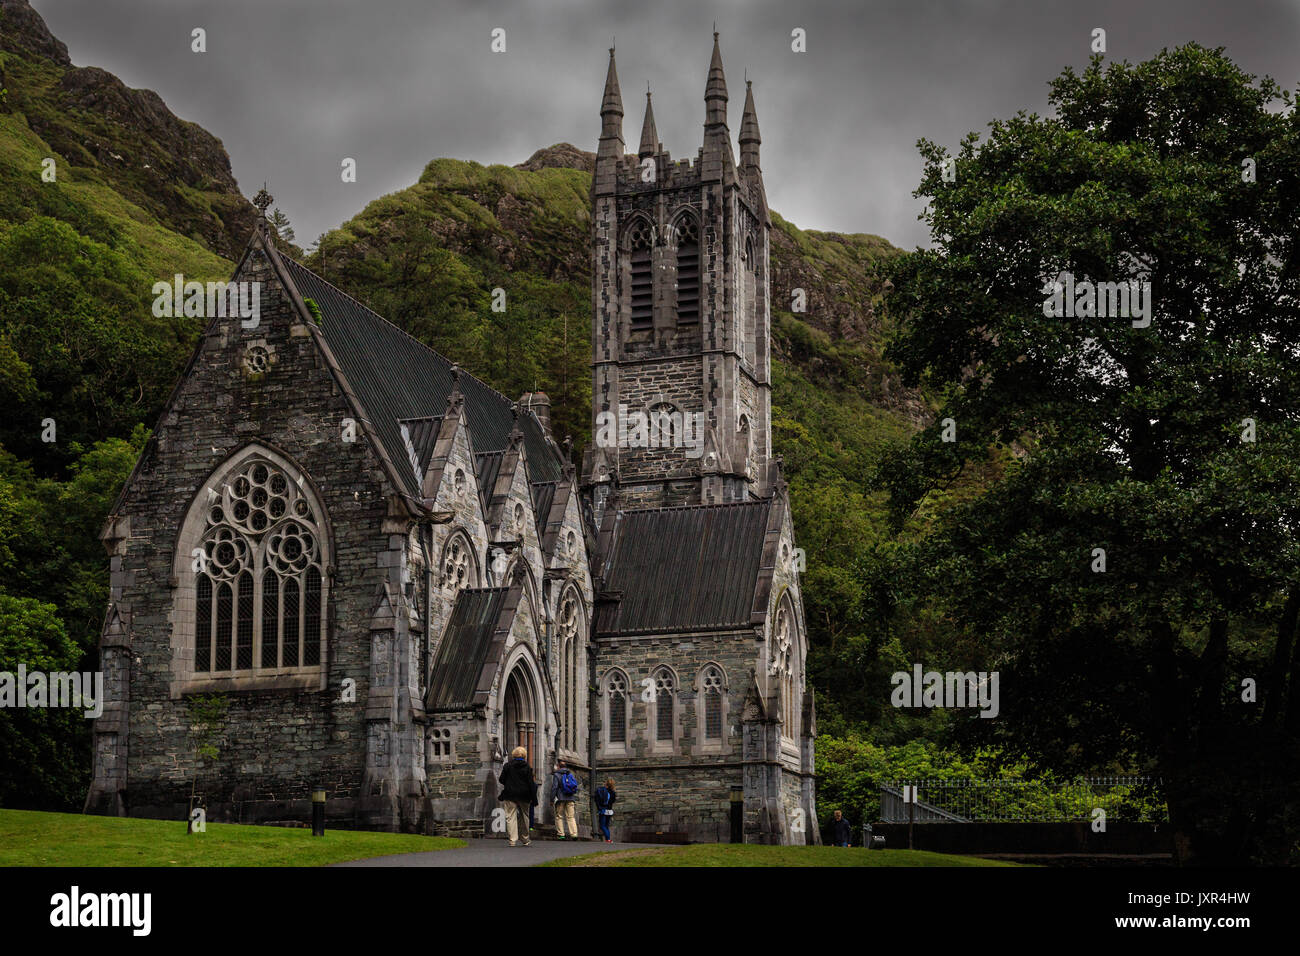 A view of the Kylemore Abbey & Victorian Walled Garden, Connemara, Ireland Stock Photo